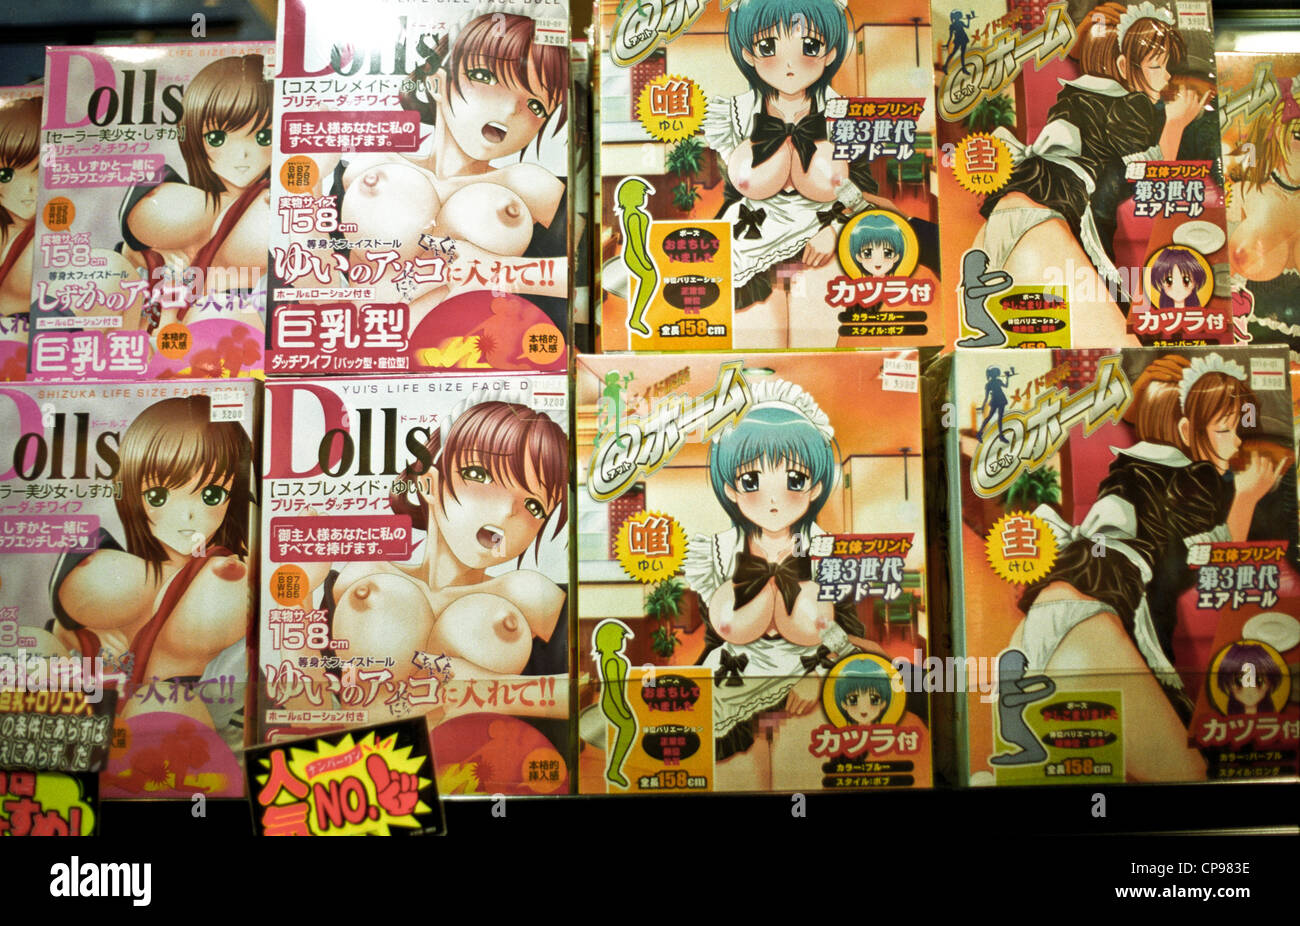 Download Free Japanese Porn Magazines 13